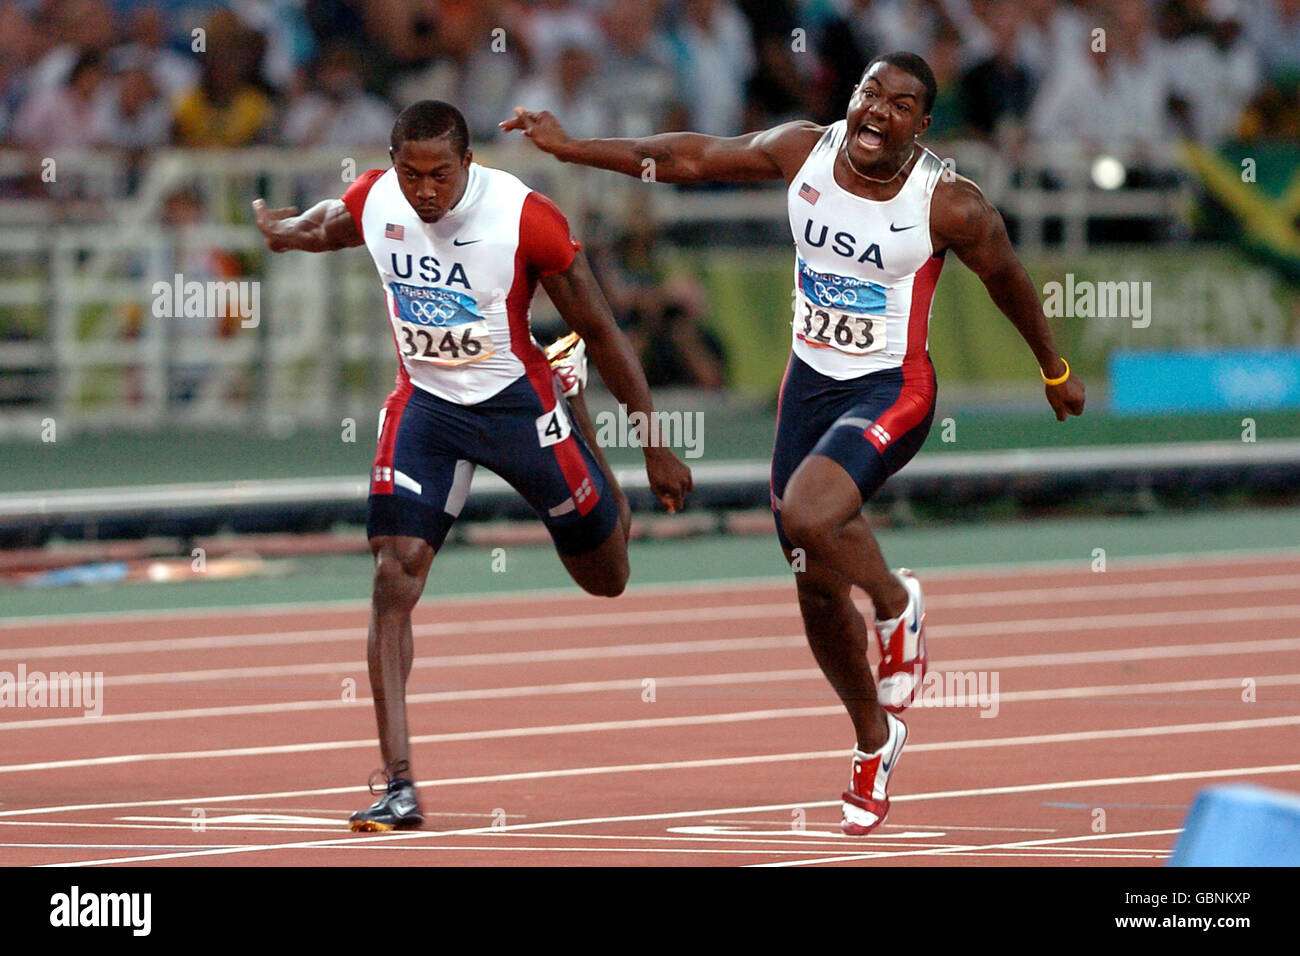 Athletics Athens Olympic Games 2004 Men S 100m Final Stock Photo Alamy